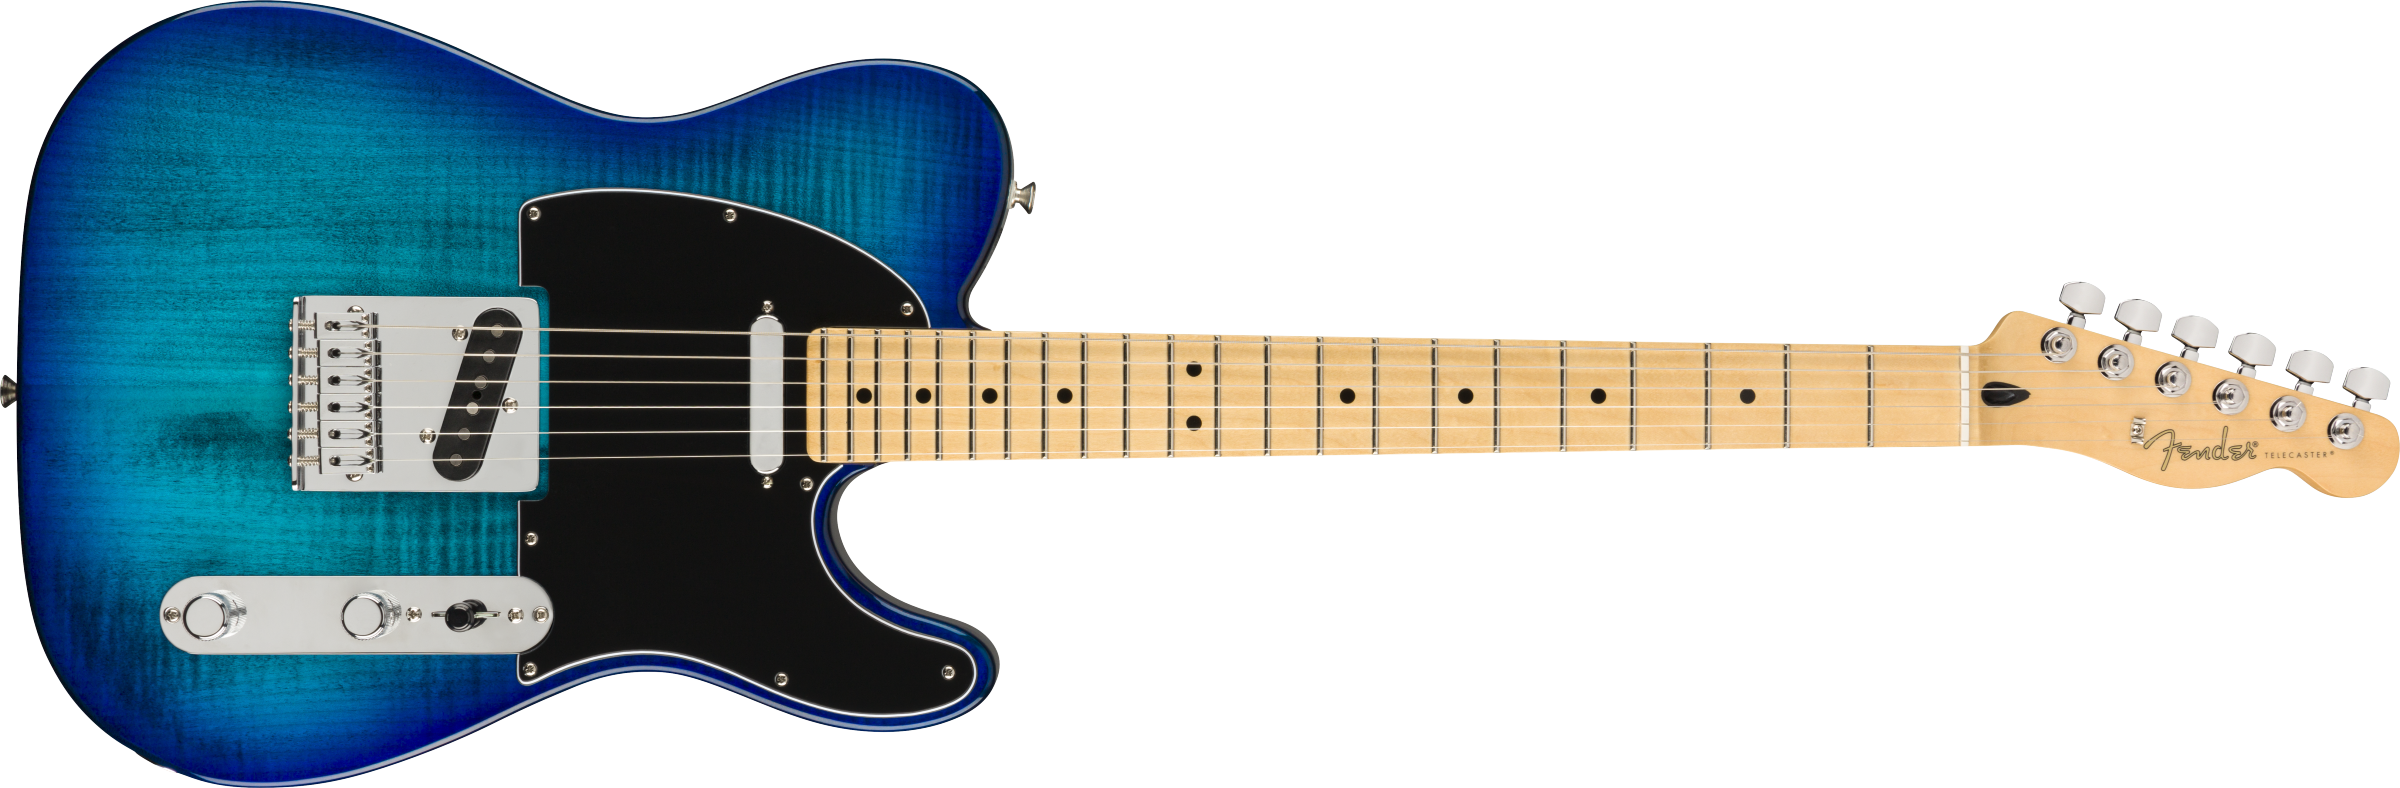 Fender® Limited Edition Player Telecaster® Plus Top, Maple Fingerboard, Blue Burst